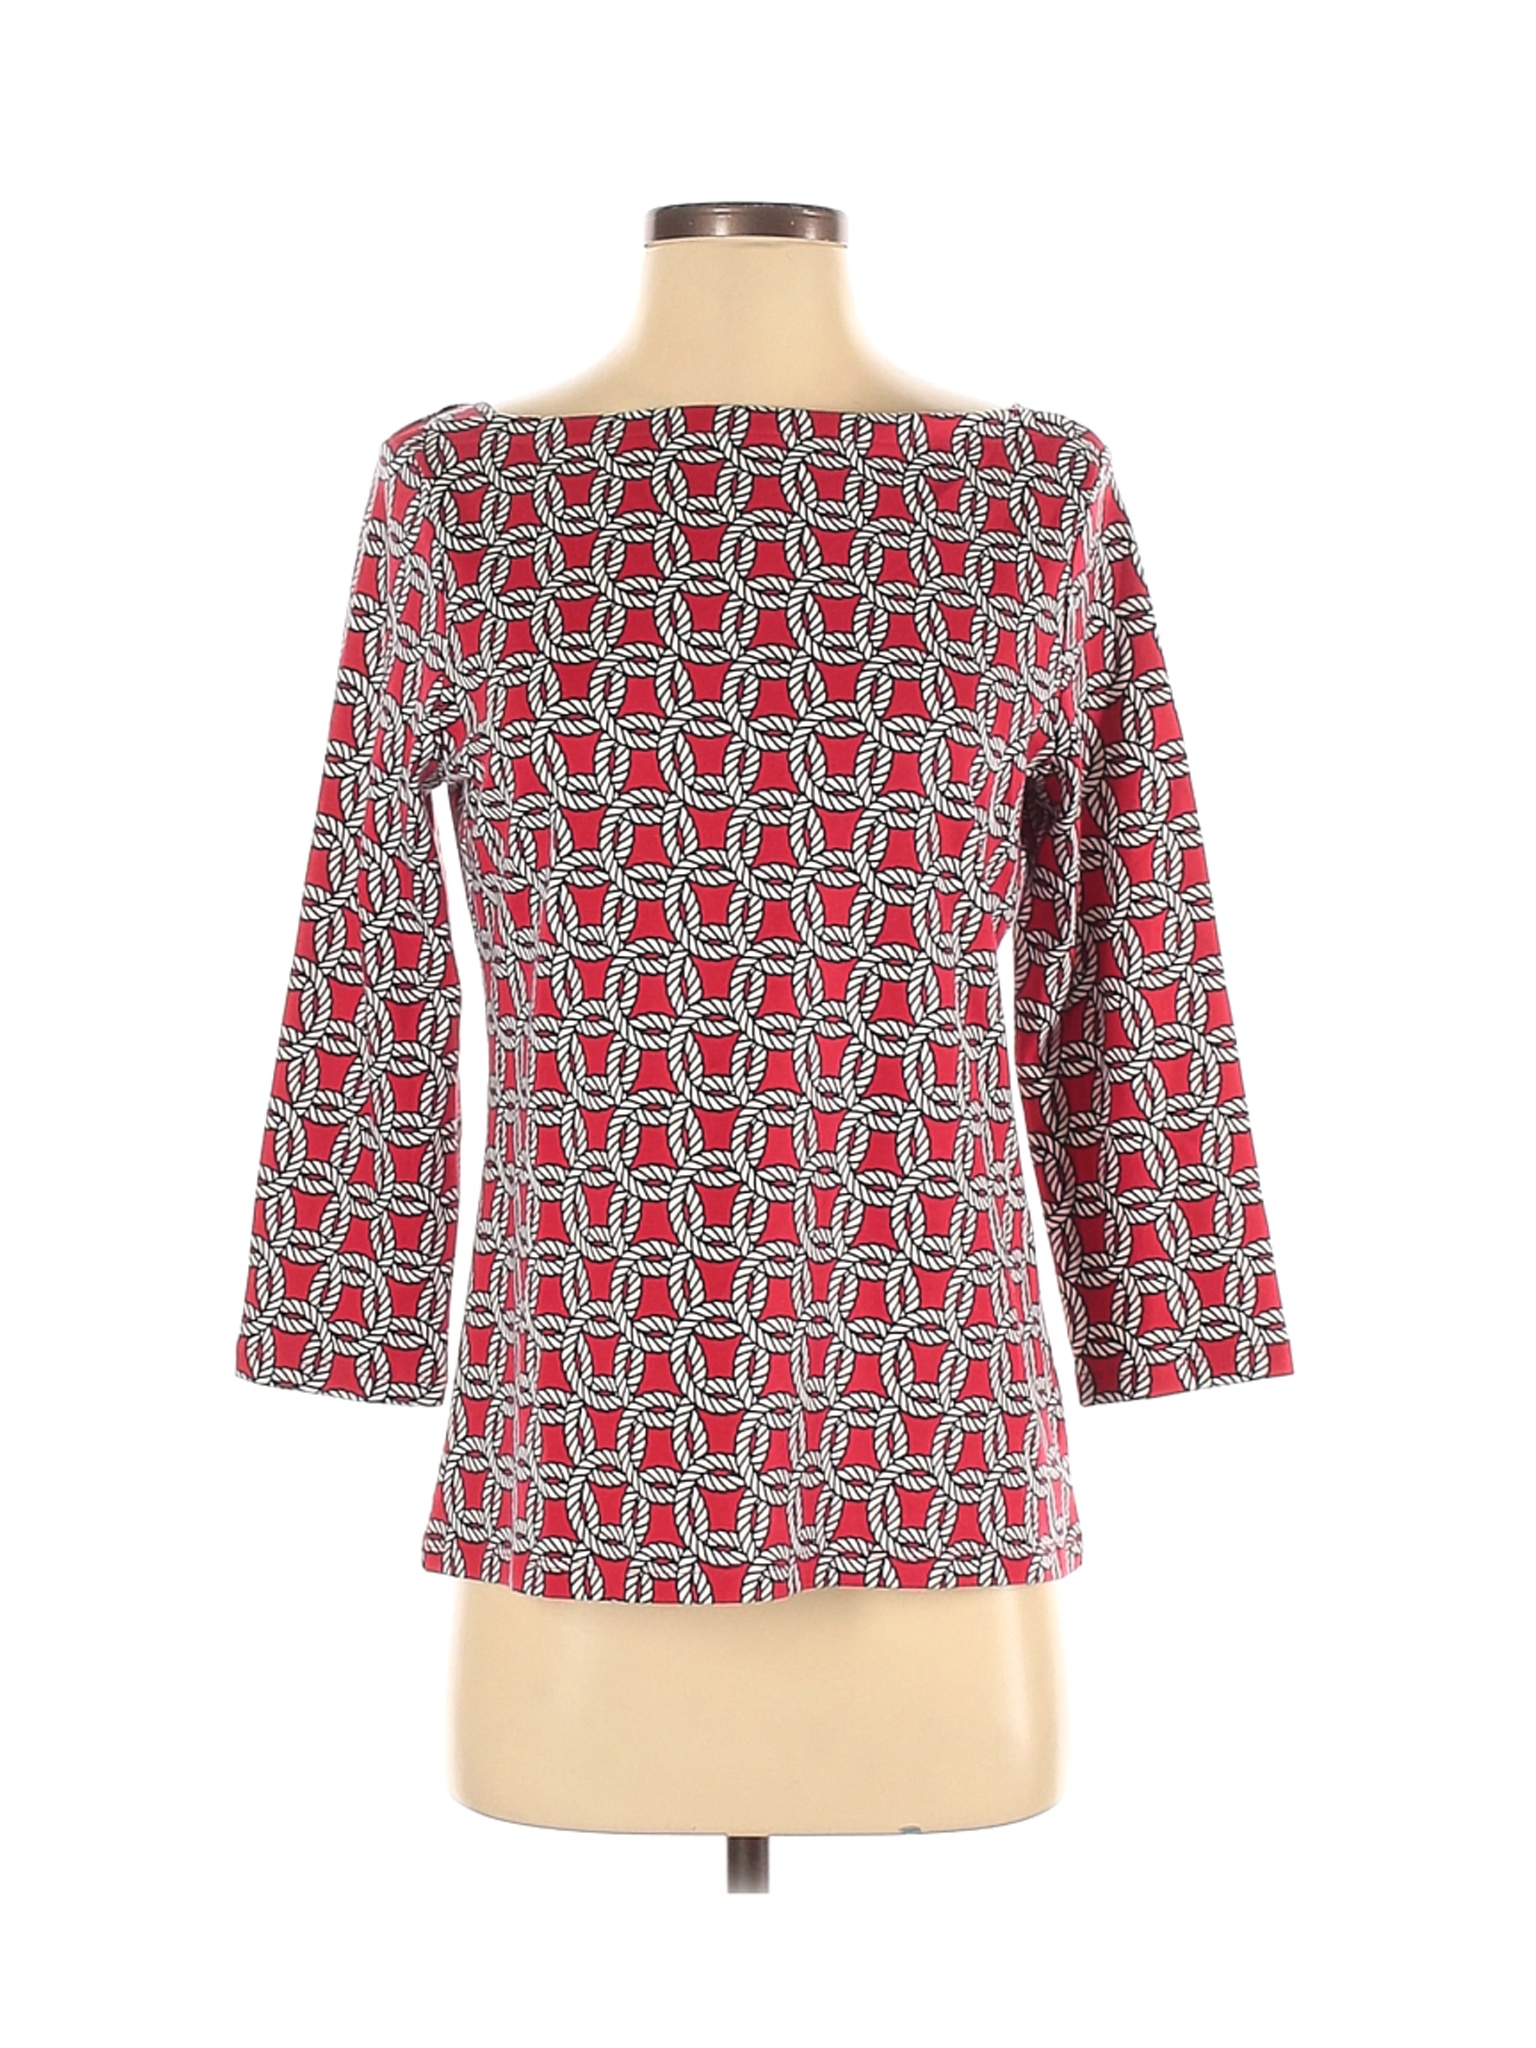 Talbots Women Red 3/4 Sleeve Top S | eBay